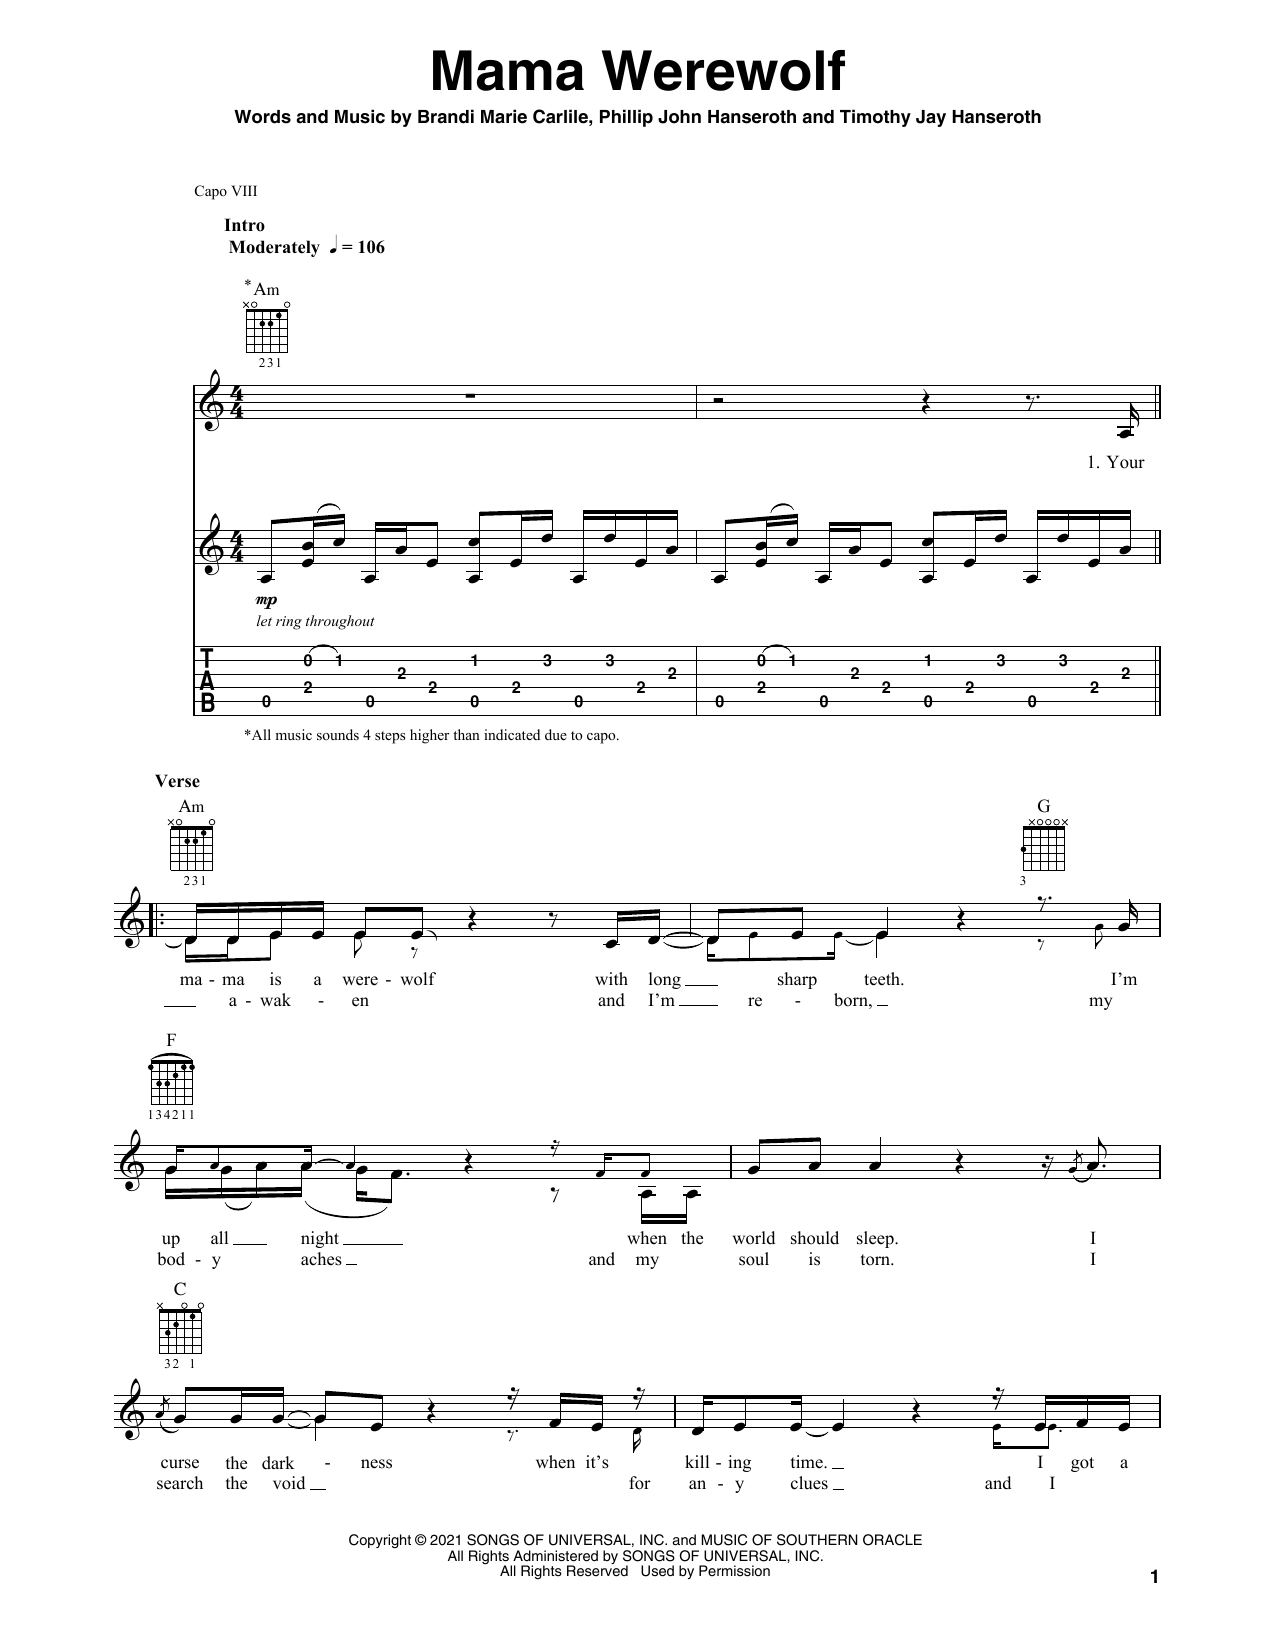 Brandi Carlile Mama Werewolf Sheet Music Notes & Chords for Solo Guitar - Download or Print PDF